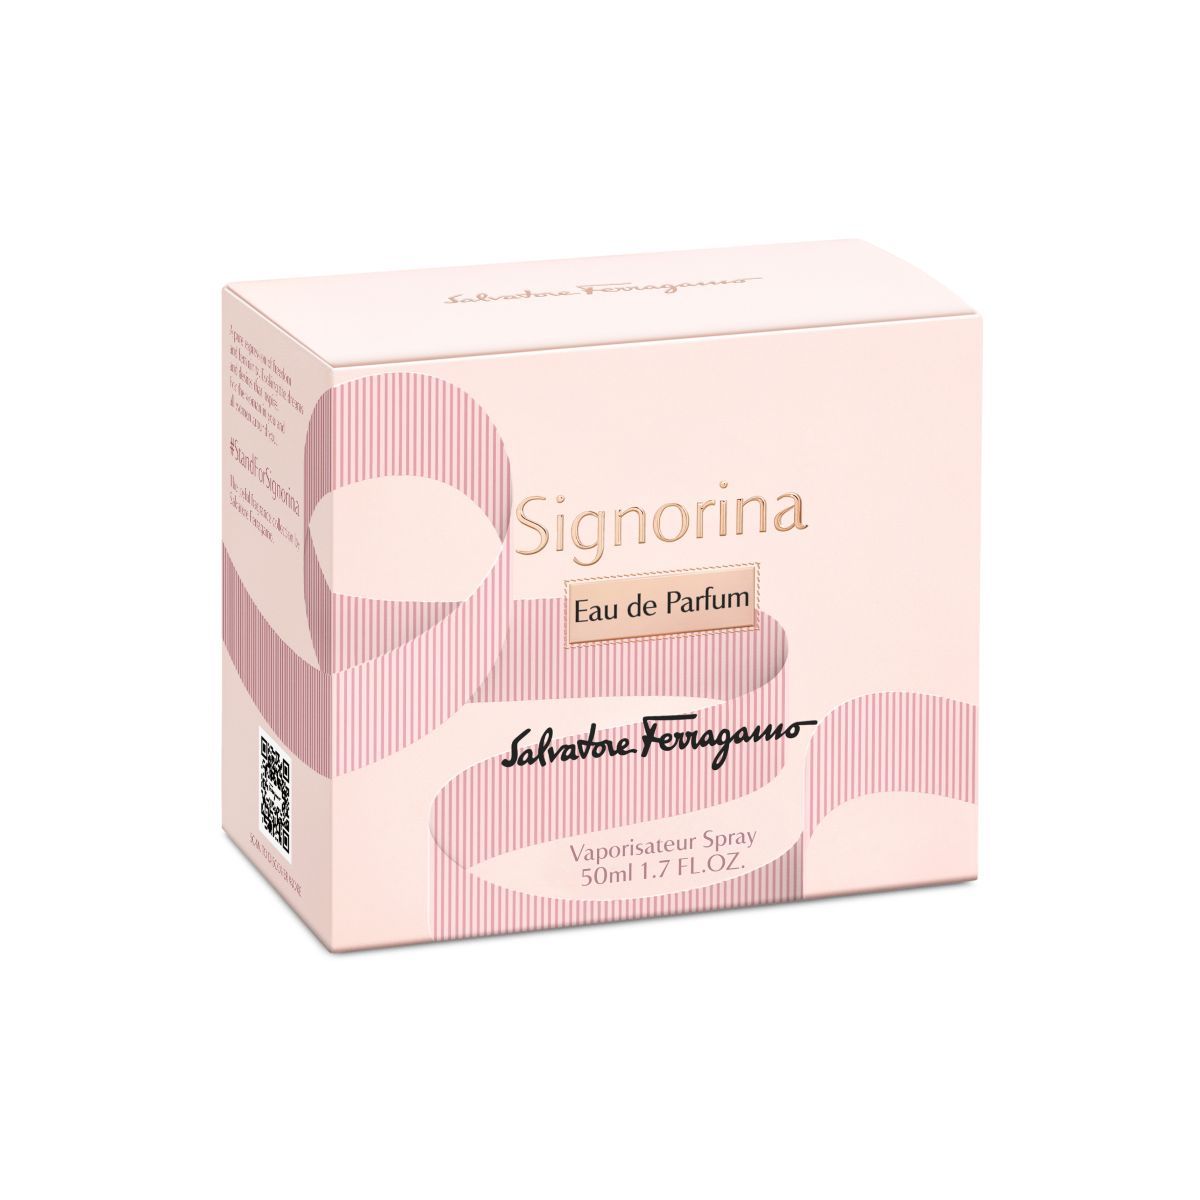 Salvatore Ferragamo Signorina eau de Parfum 50 ml.